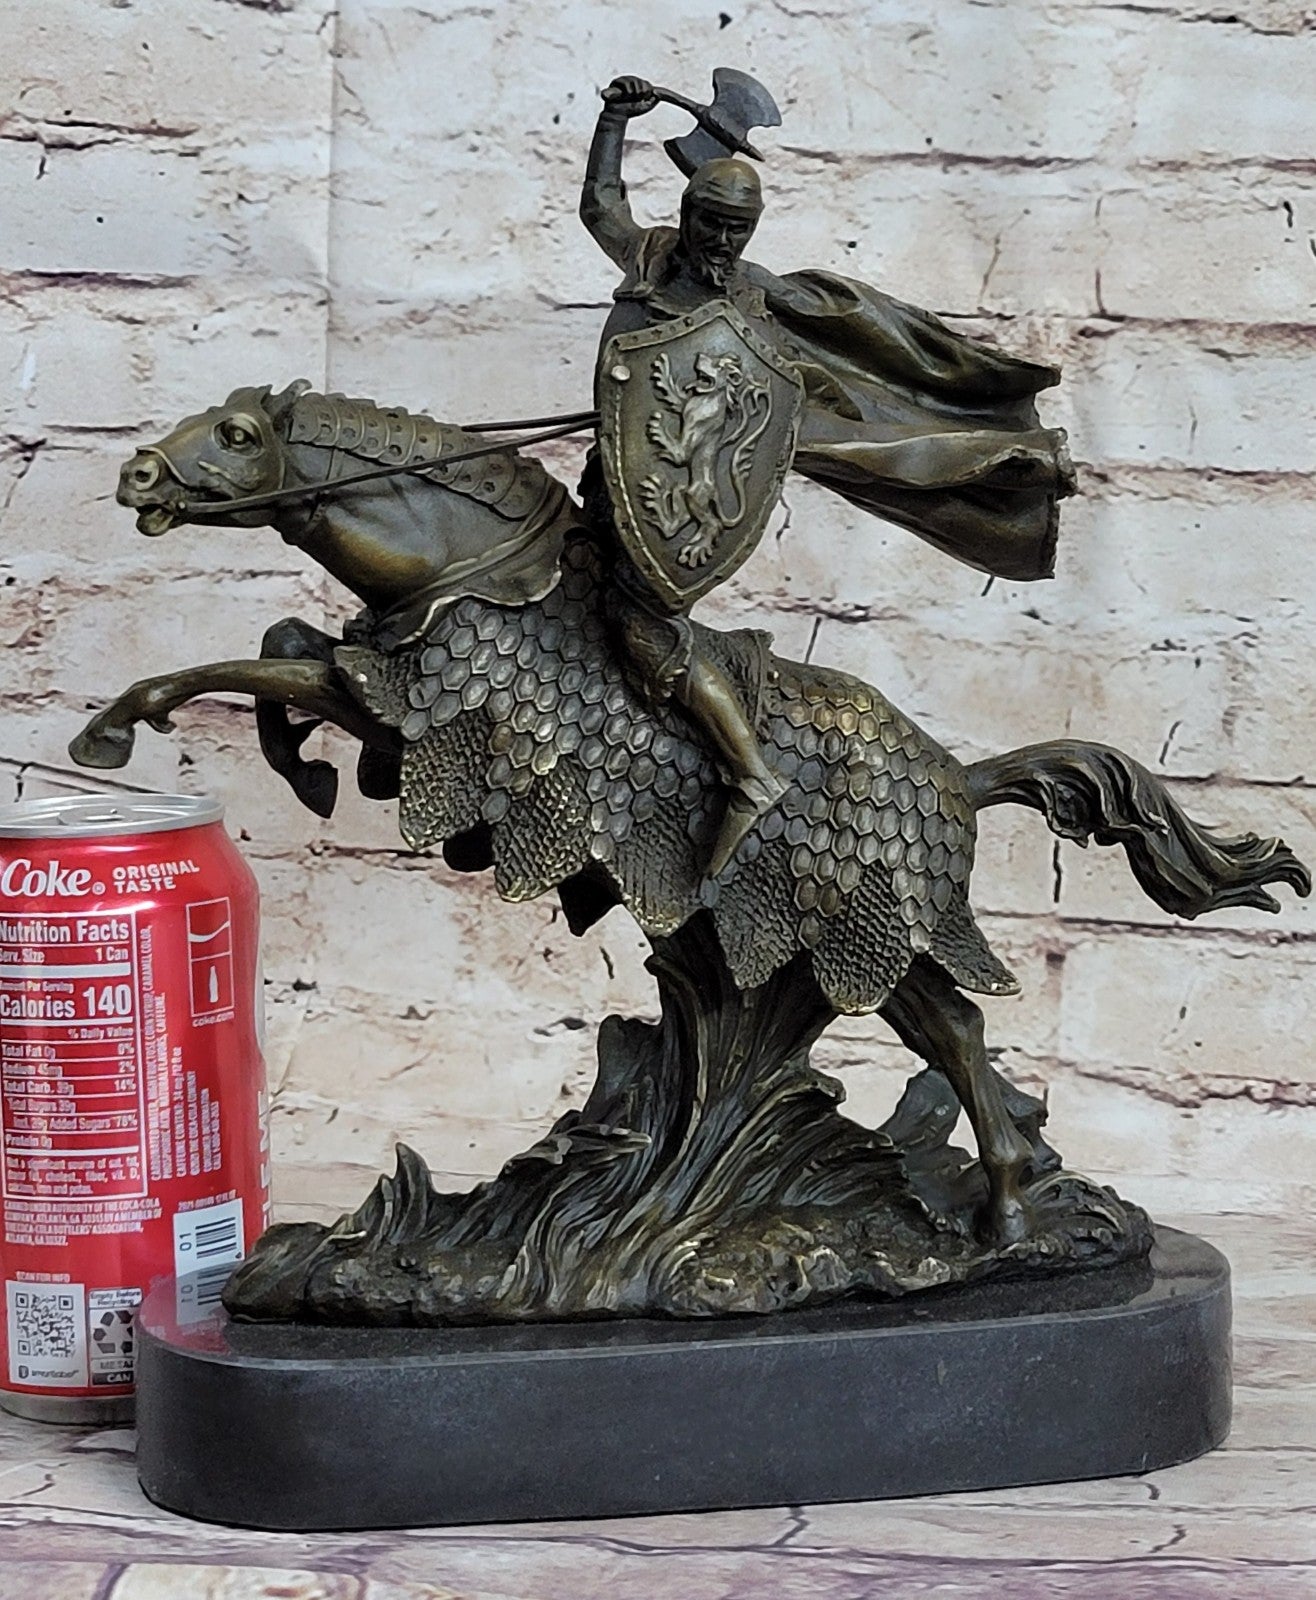 Viking sculpture - warrior on battle horse - bronze and marble - 11 (28cm)" Statue